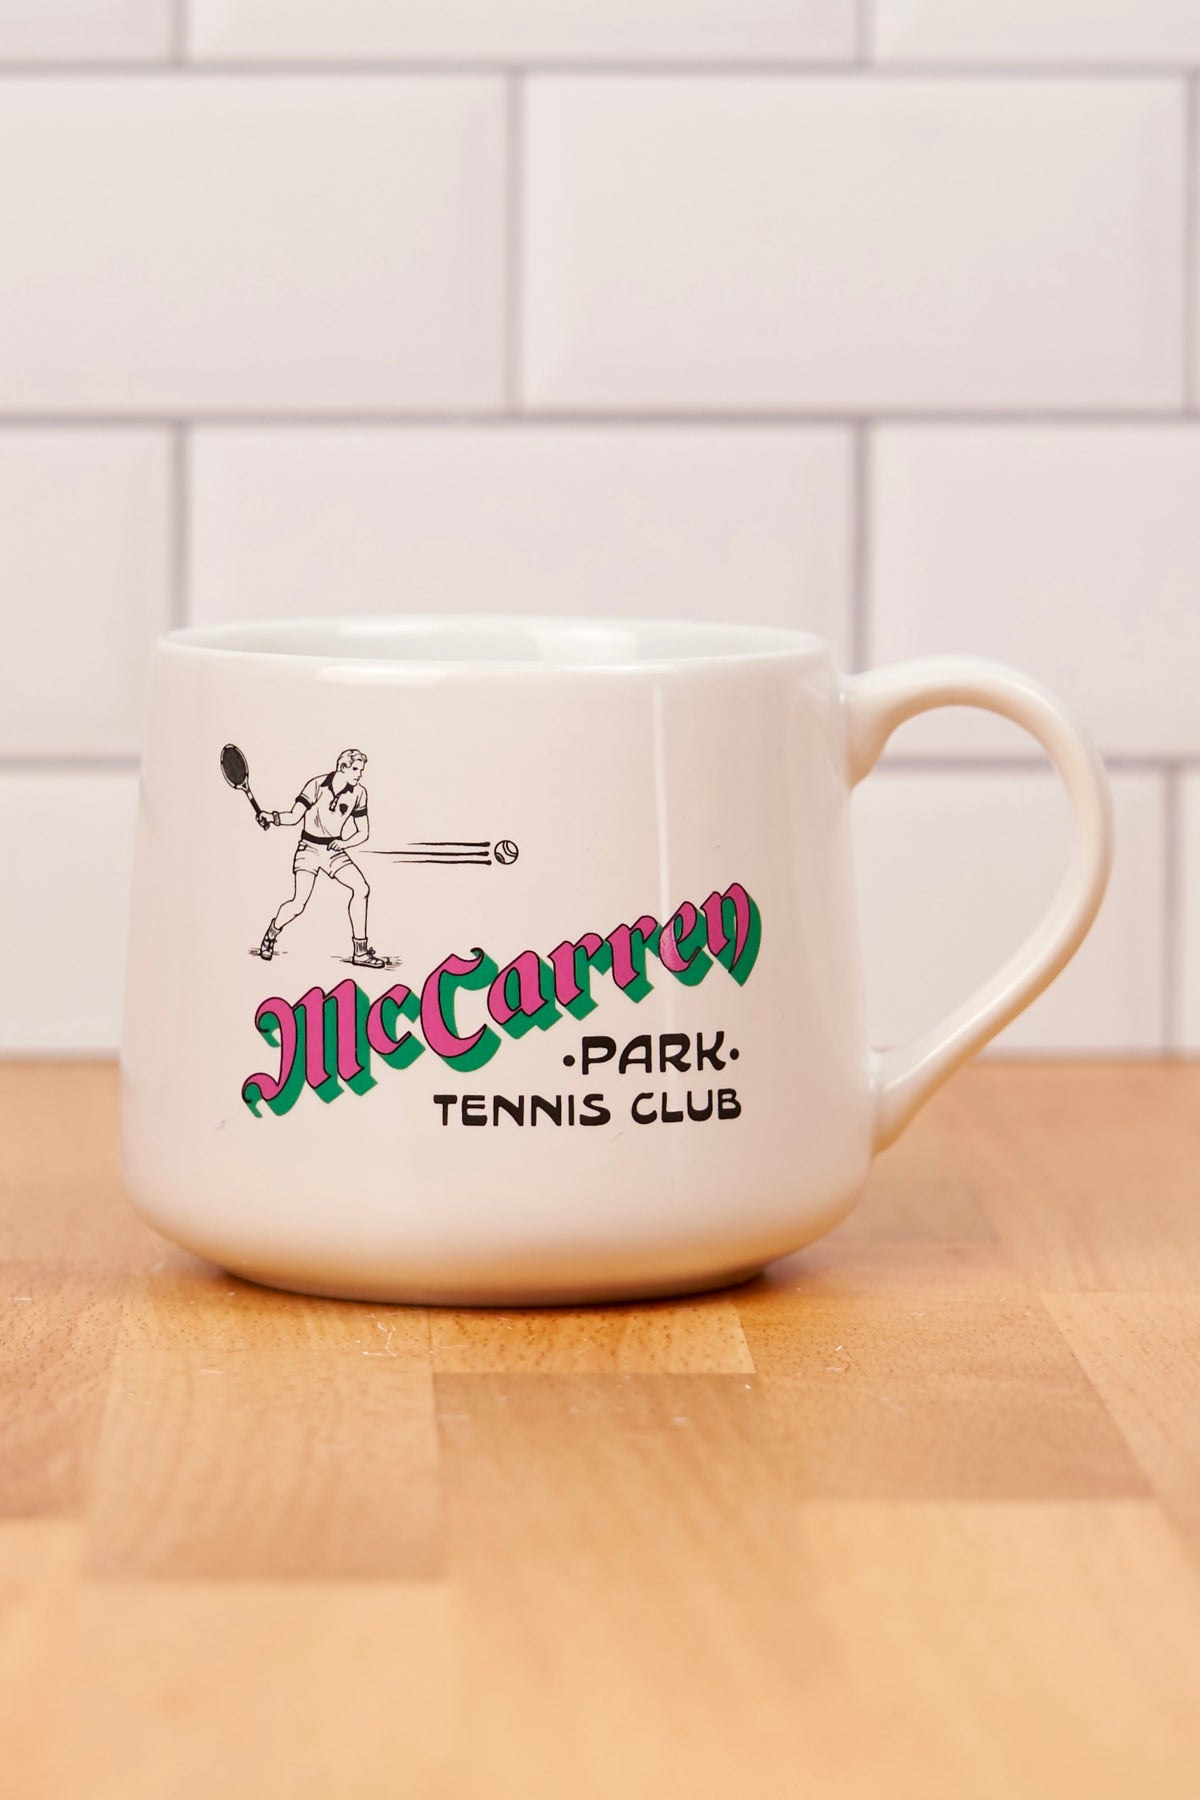 Upstate Stock x Created.co 12oz Ceramic Mug - McCarren Tennis Club